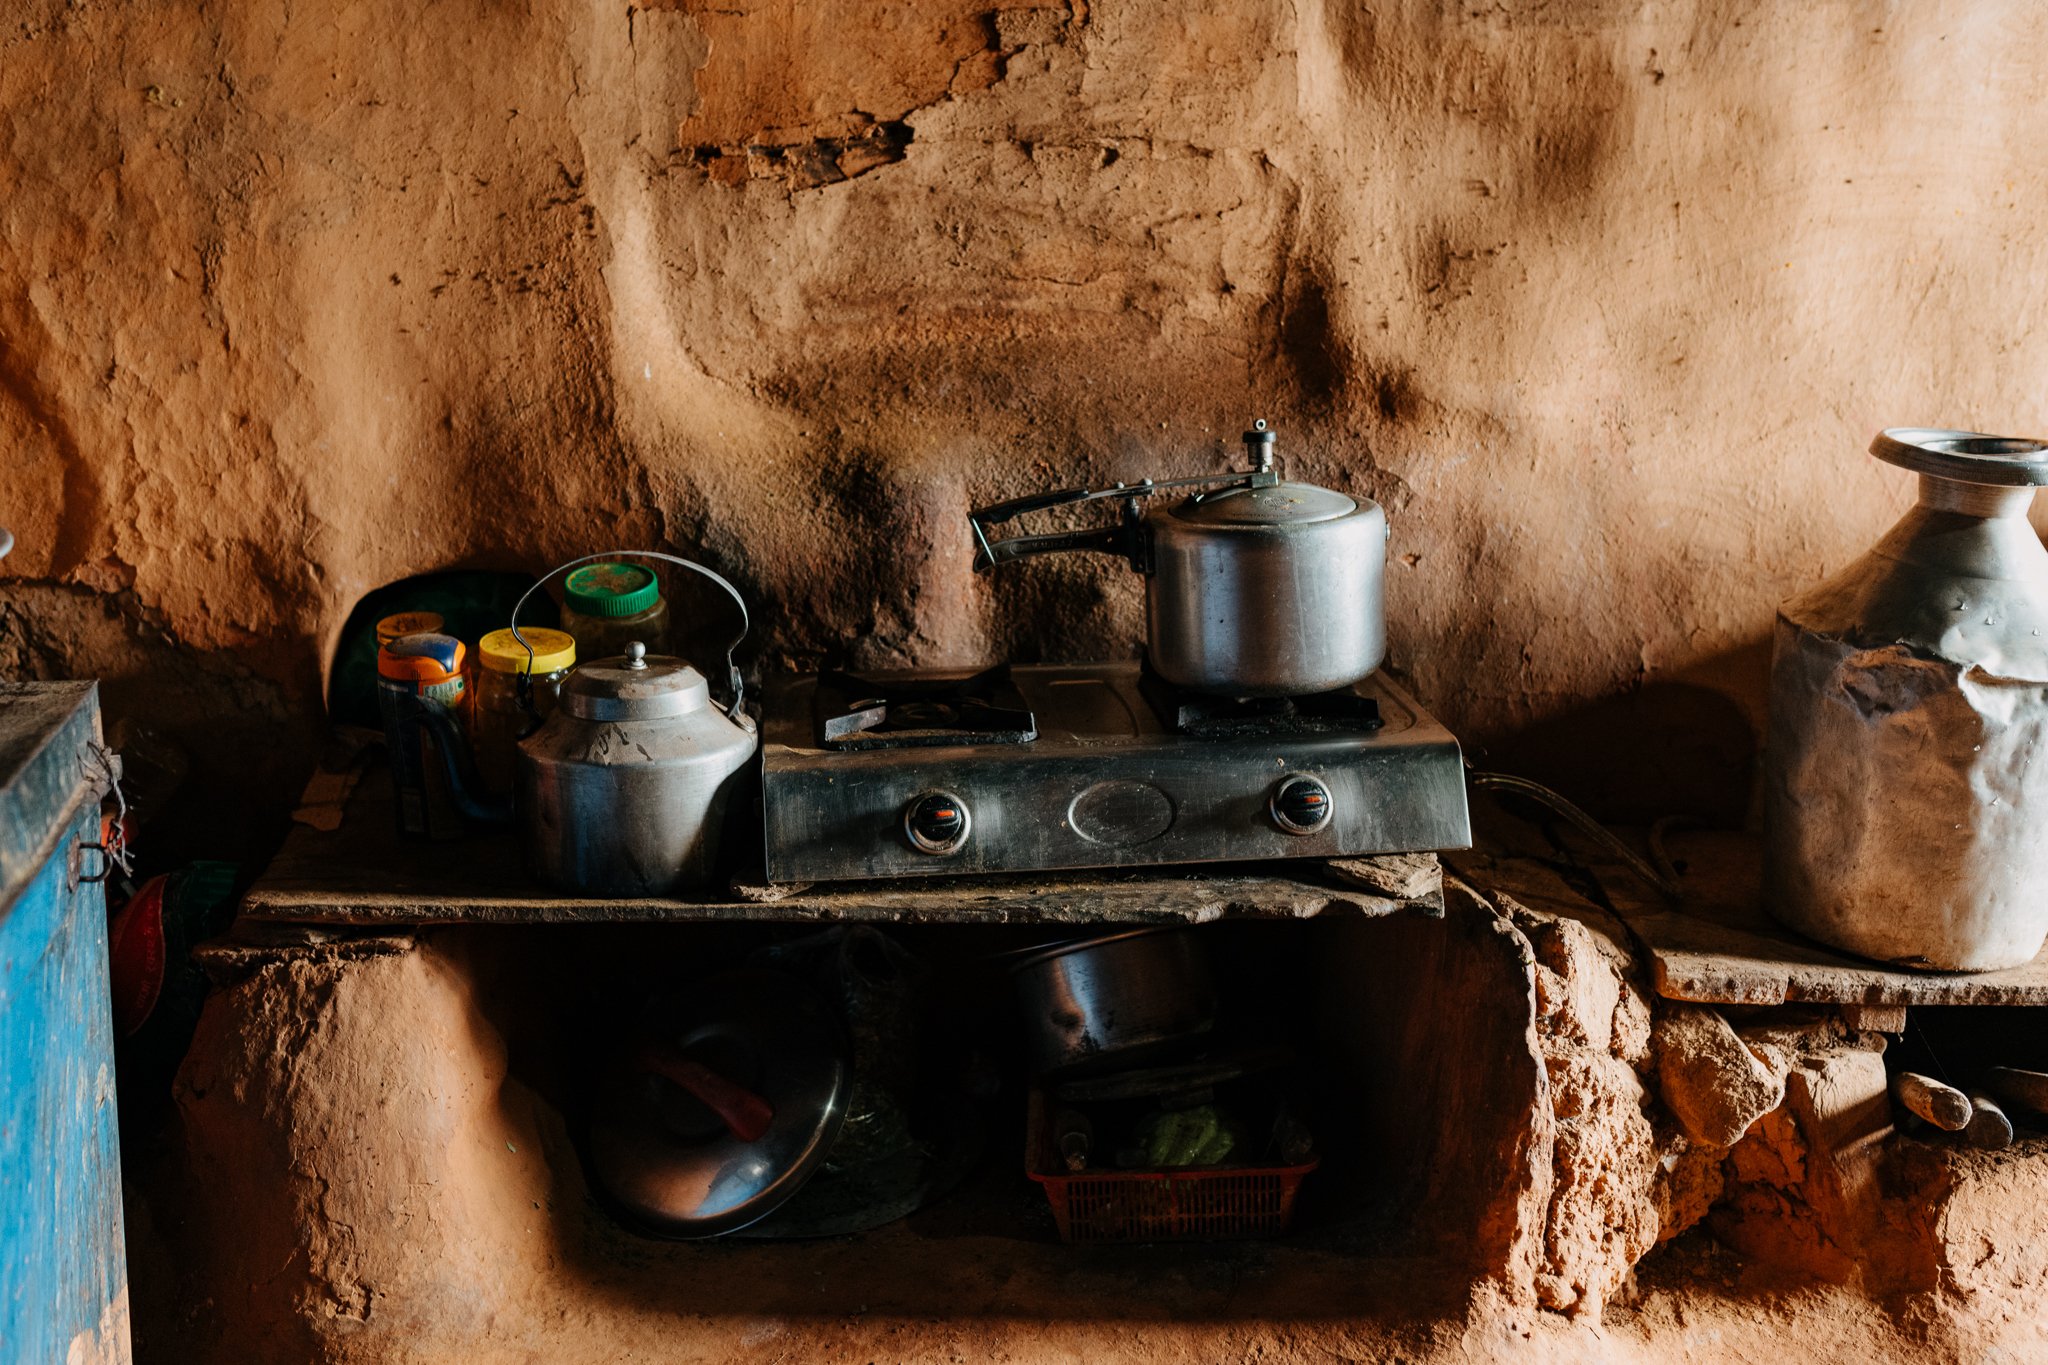 A shelf in a rural home - Nepal.jpg